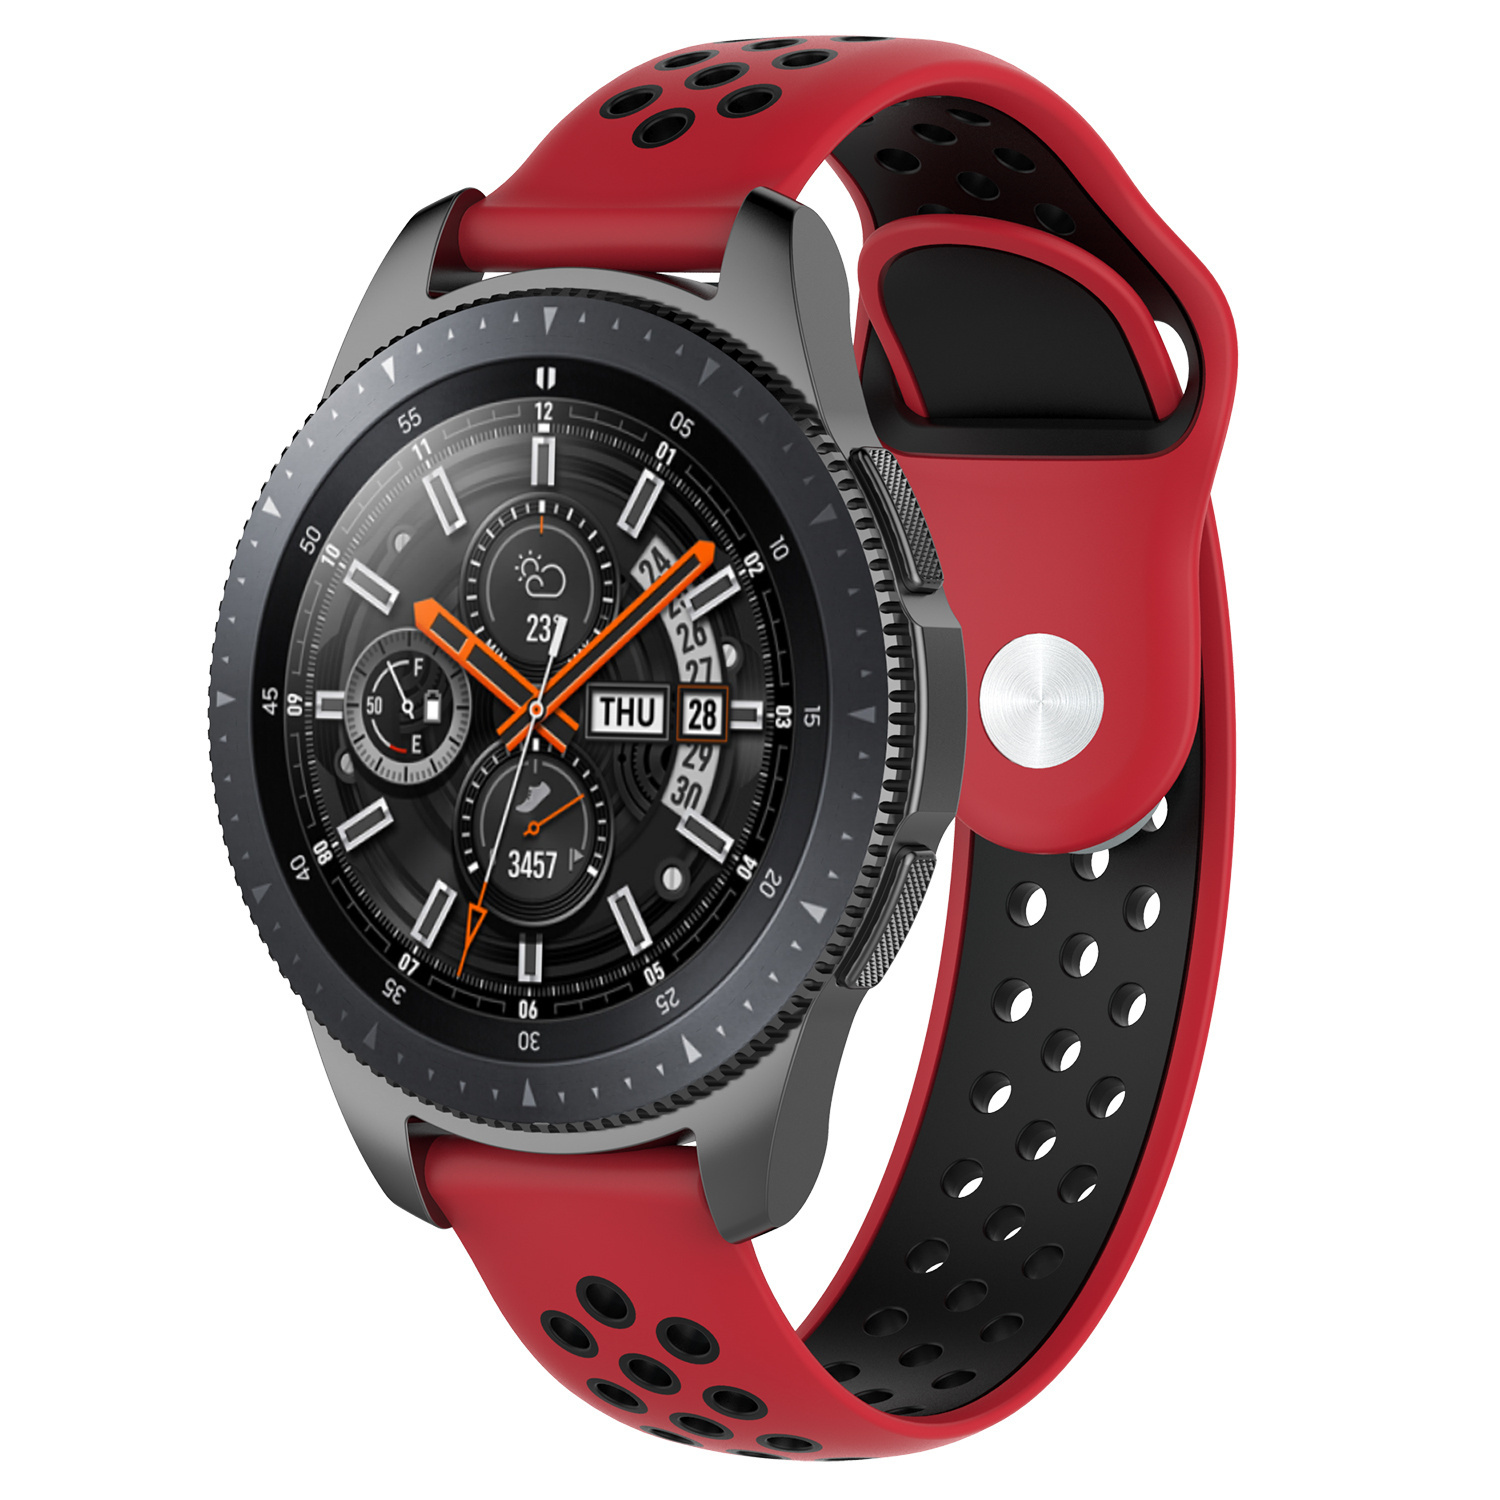 Samsung Galaxy Watch dupla sport szíj - piros fekete